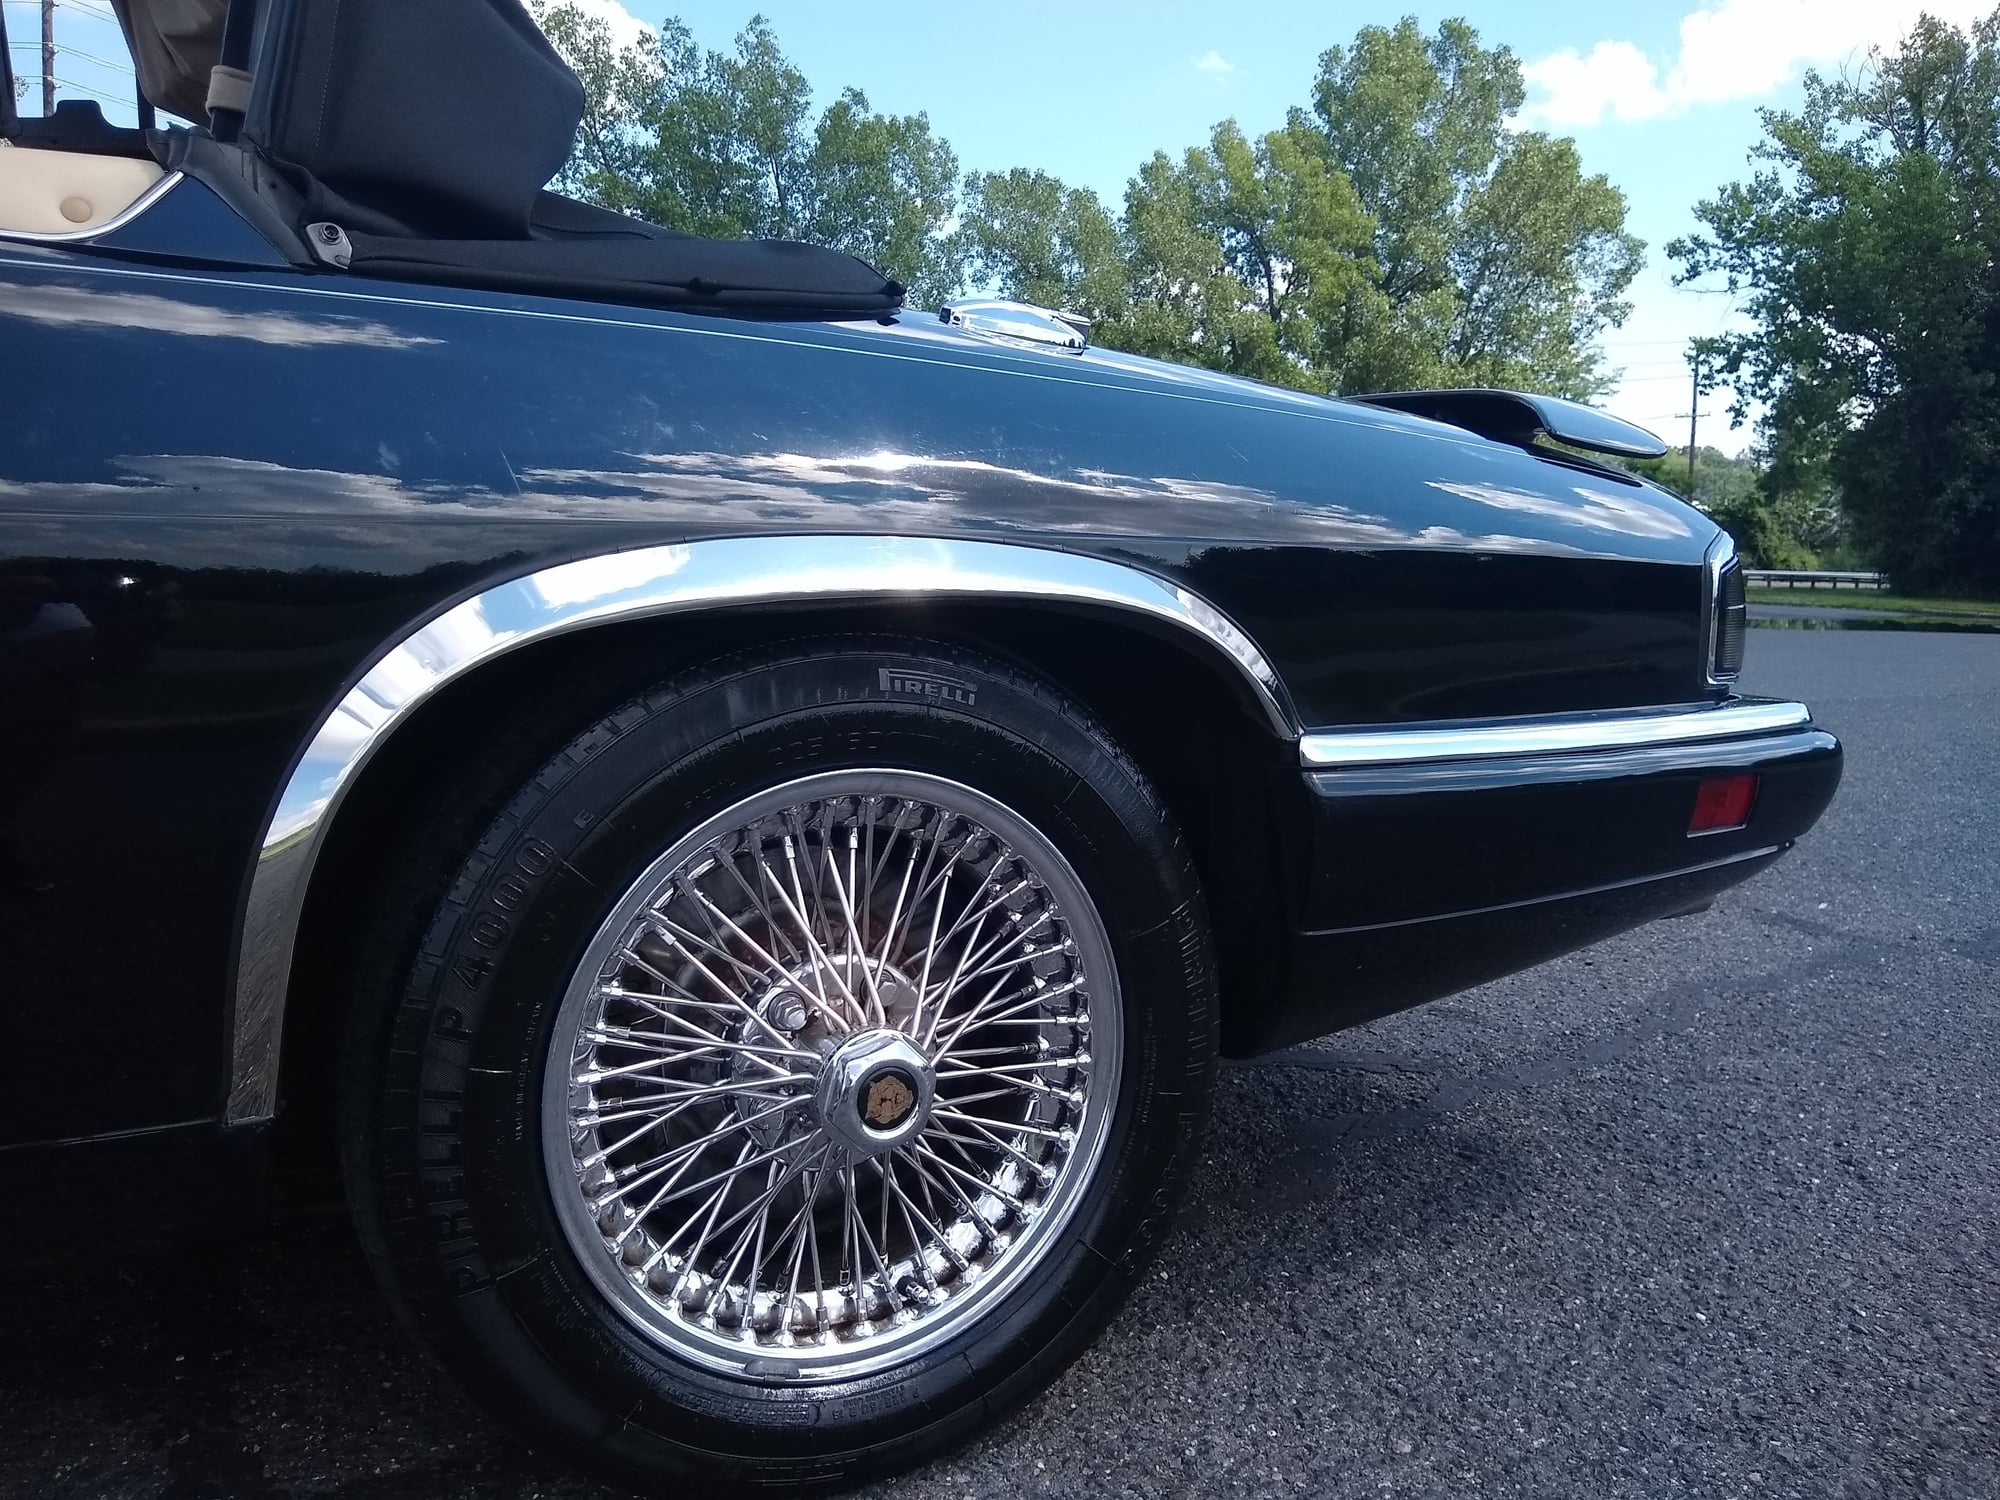 1994 Jaguar XJS - 1994 XJS V12 convertible - Used - VIN SAJNX234XRC190415 - 79,800 Miles - 12 cyl - 2WD - Automatic - Convertible - Black - Fort Lee, NJ 07024, United States